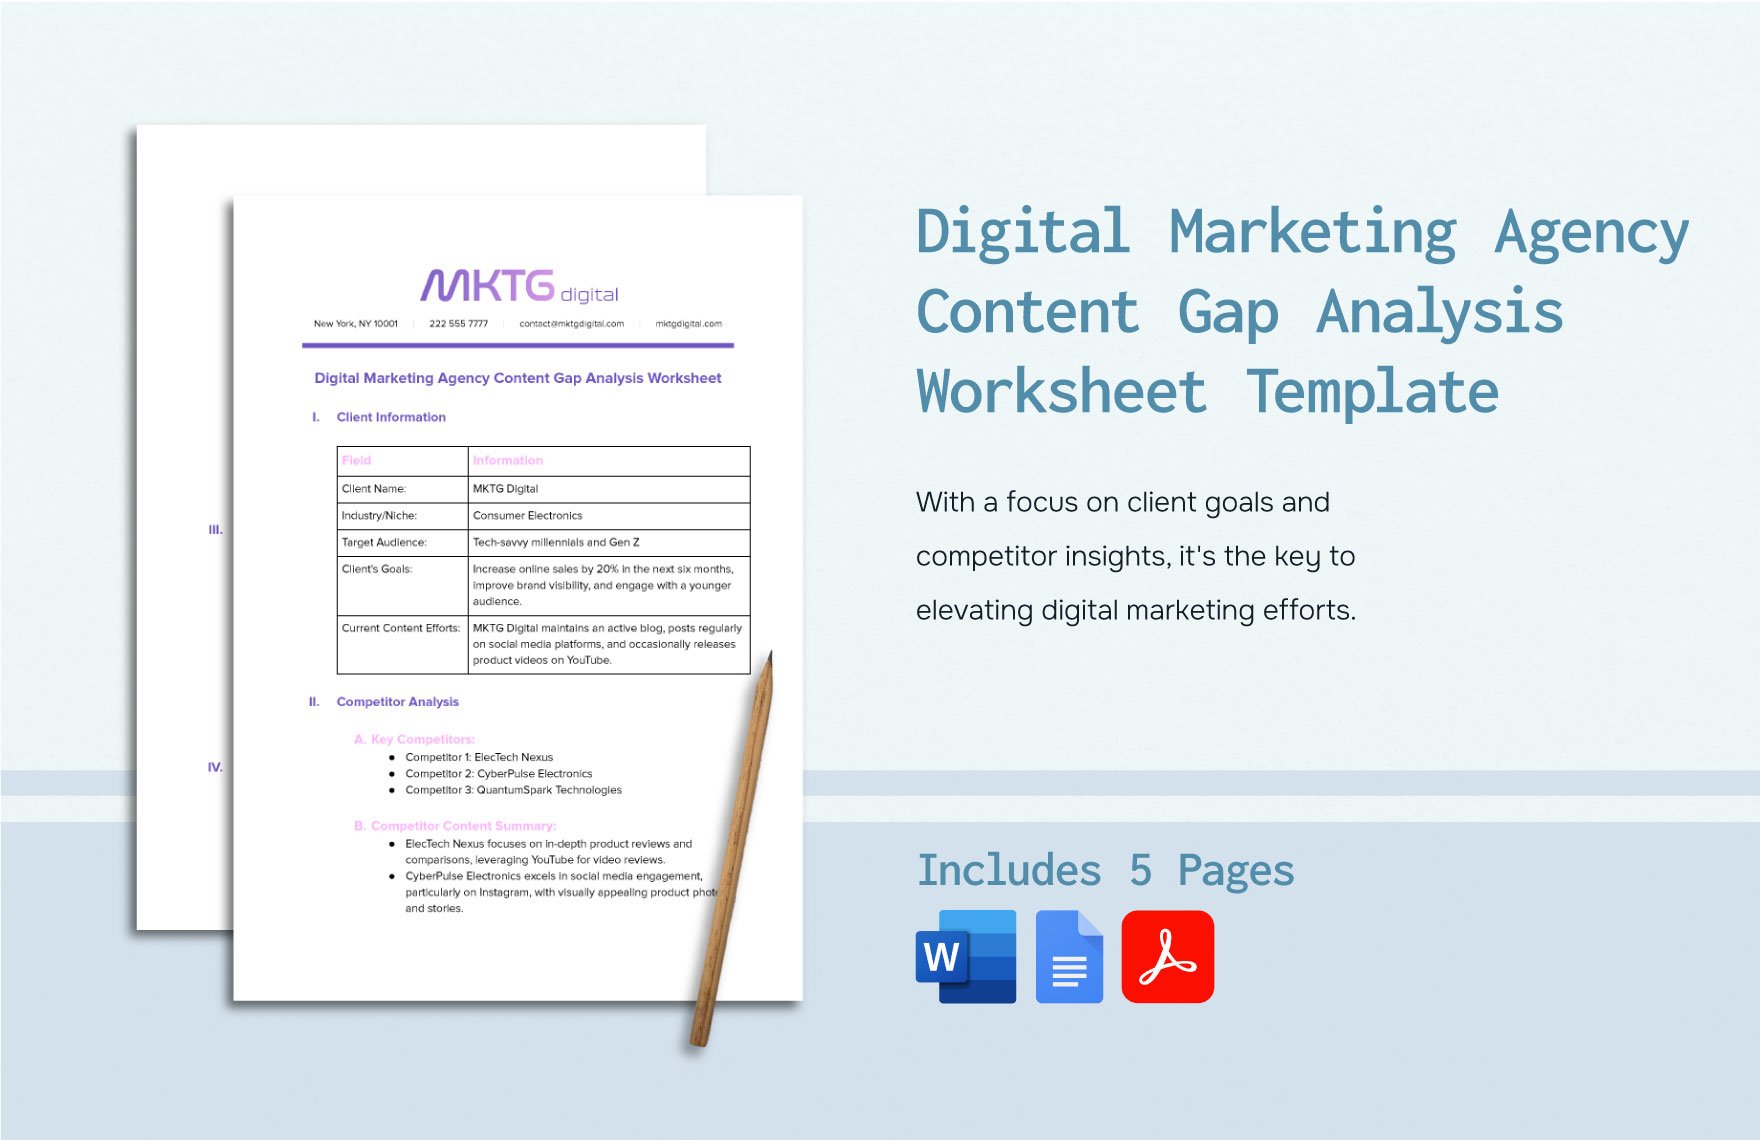 Digital Marketing Agency Content Gap Analysis Worksheet Template in Word, Google Docs, PDF